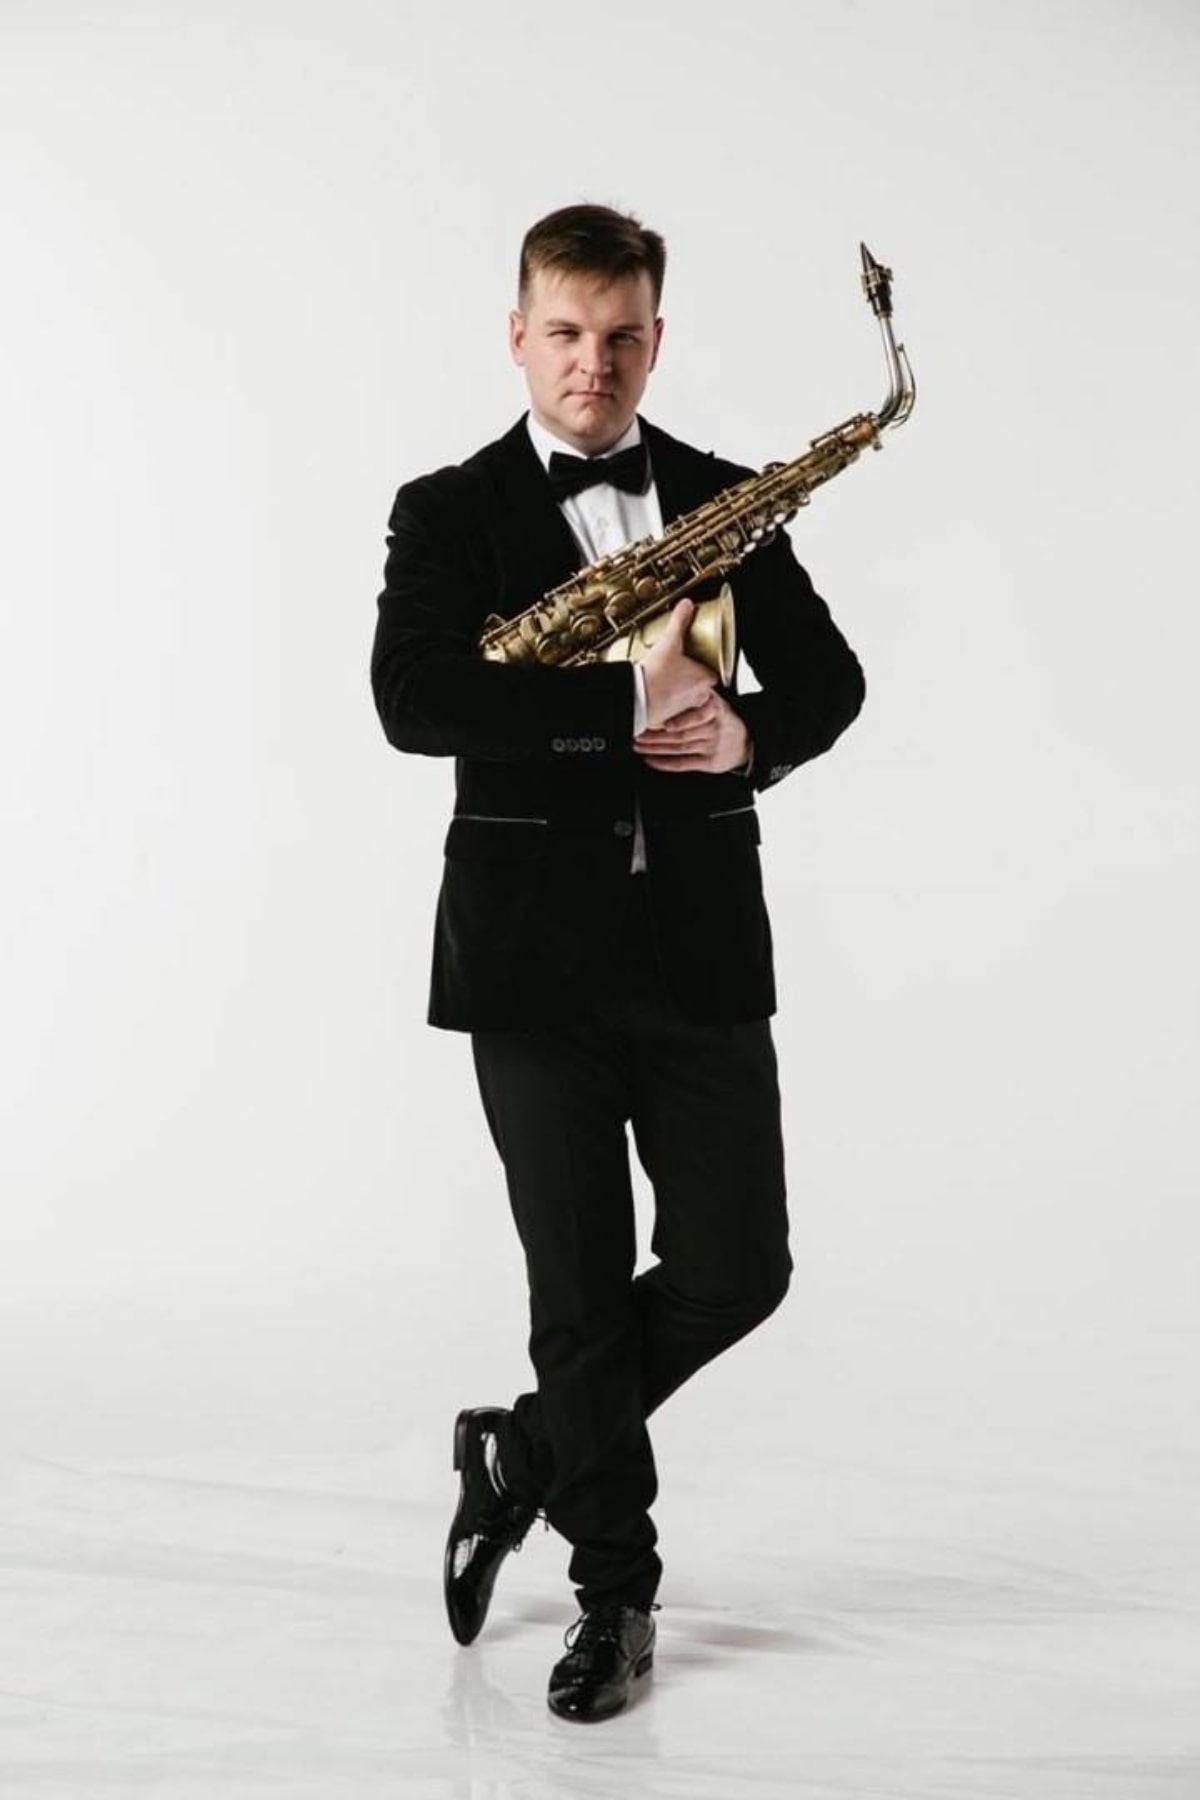 Taras Gusarov with his saxophone